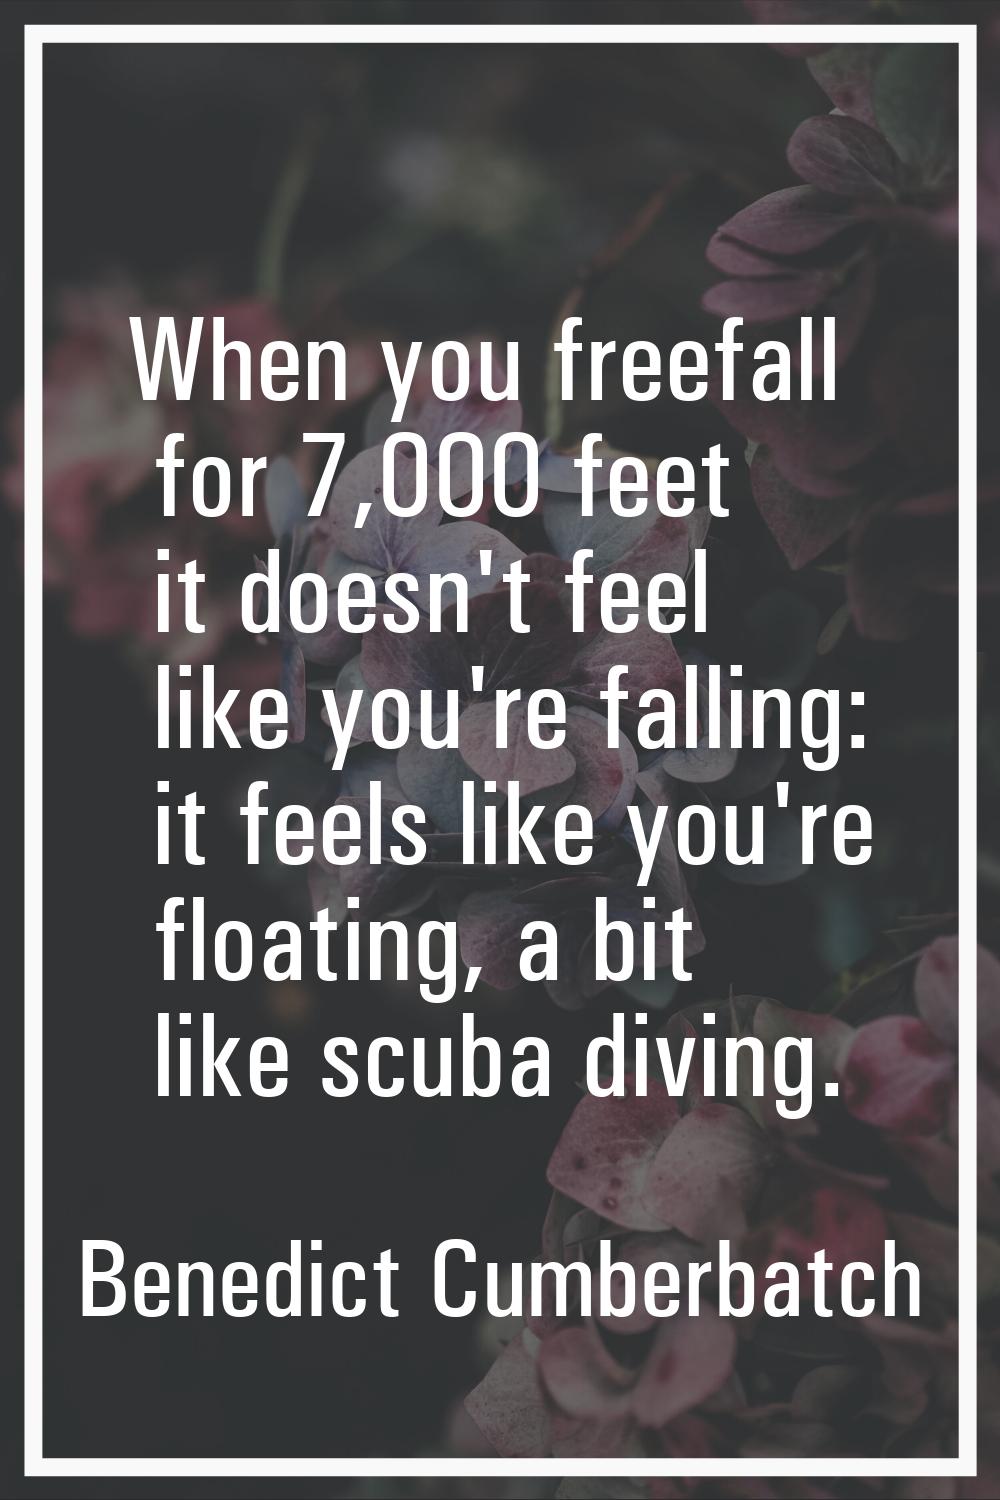 When you freefall for 7,000 feet it doesn't feel like you're falling: it feels like you're floating